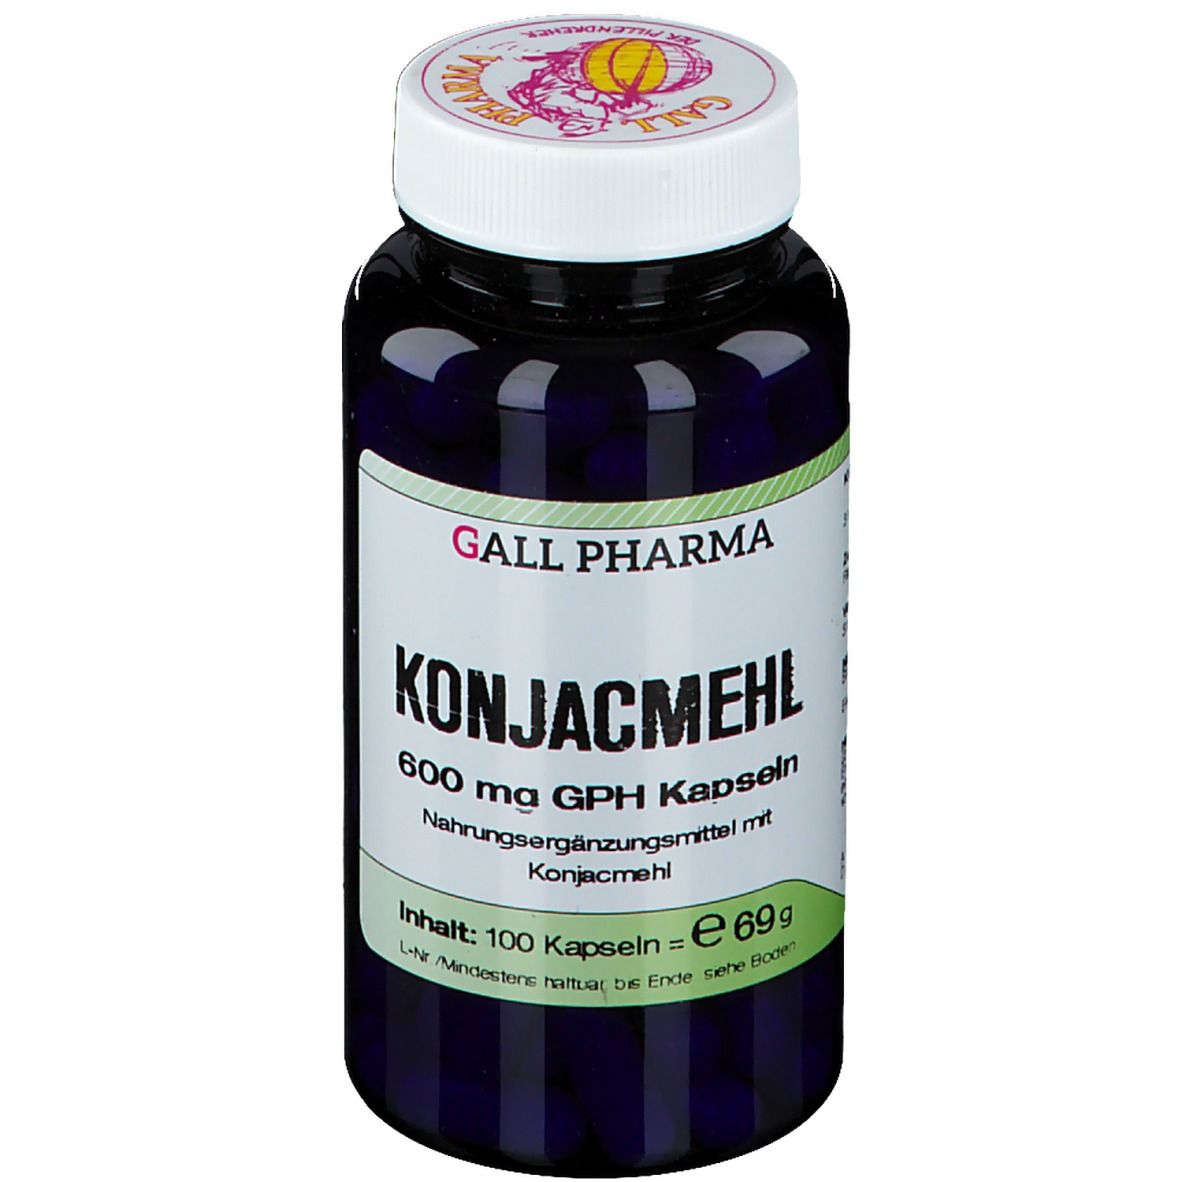 Gall Pharma Konjacmehl 600 mg